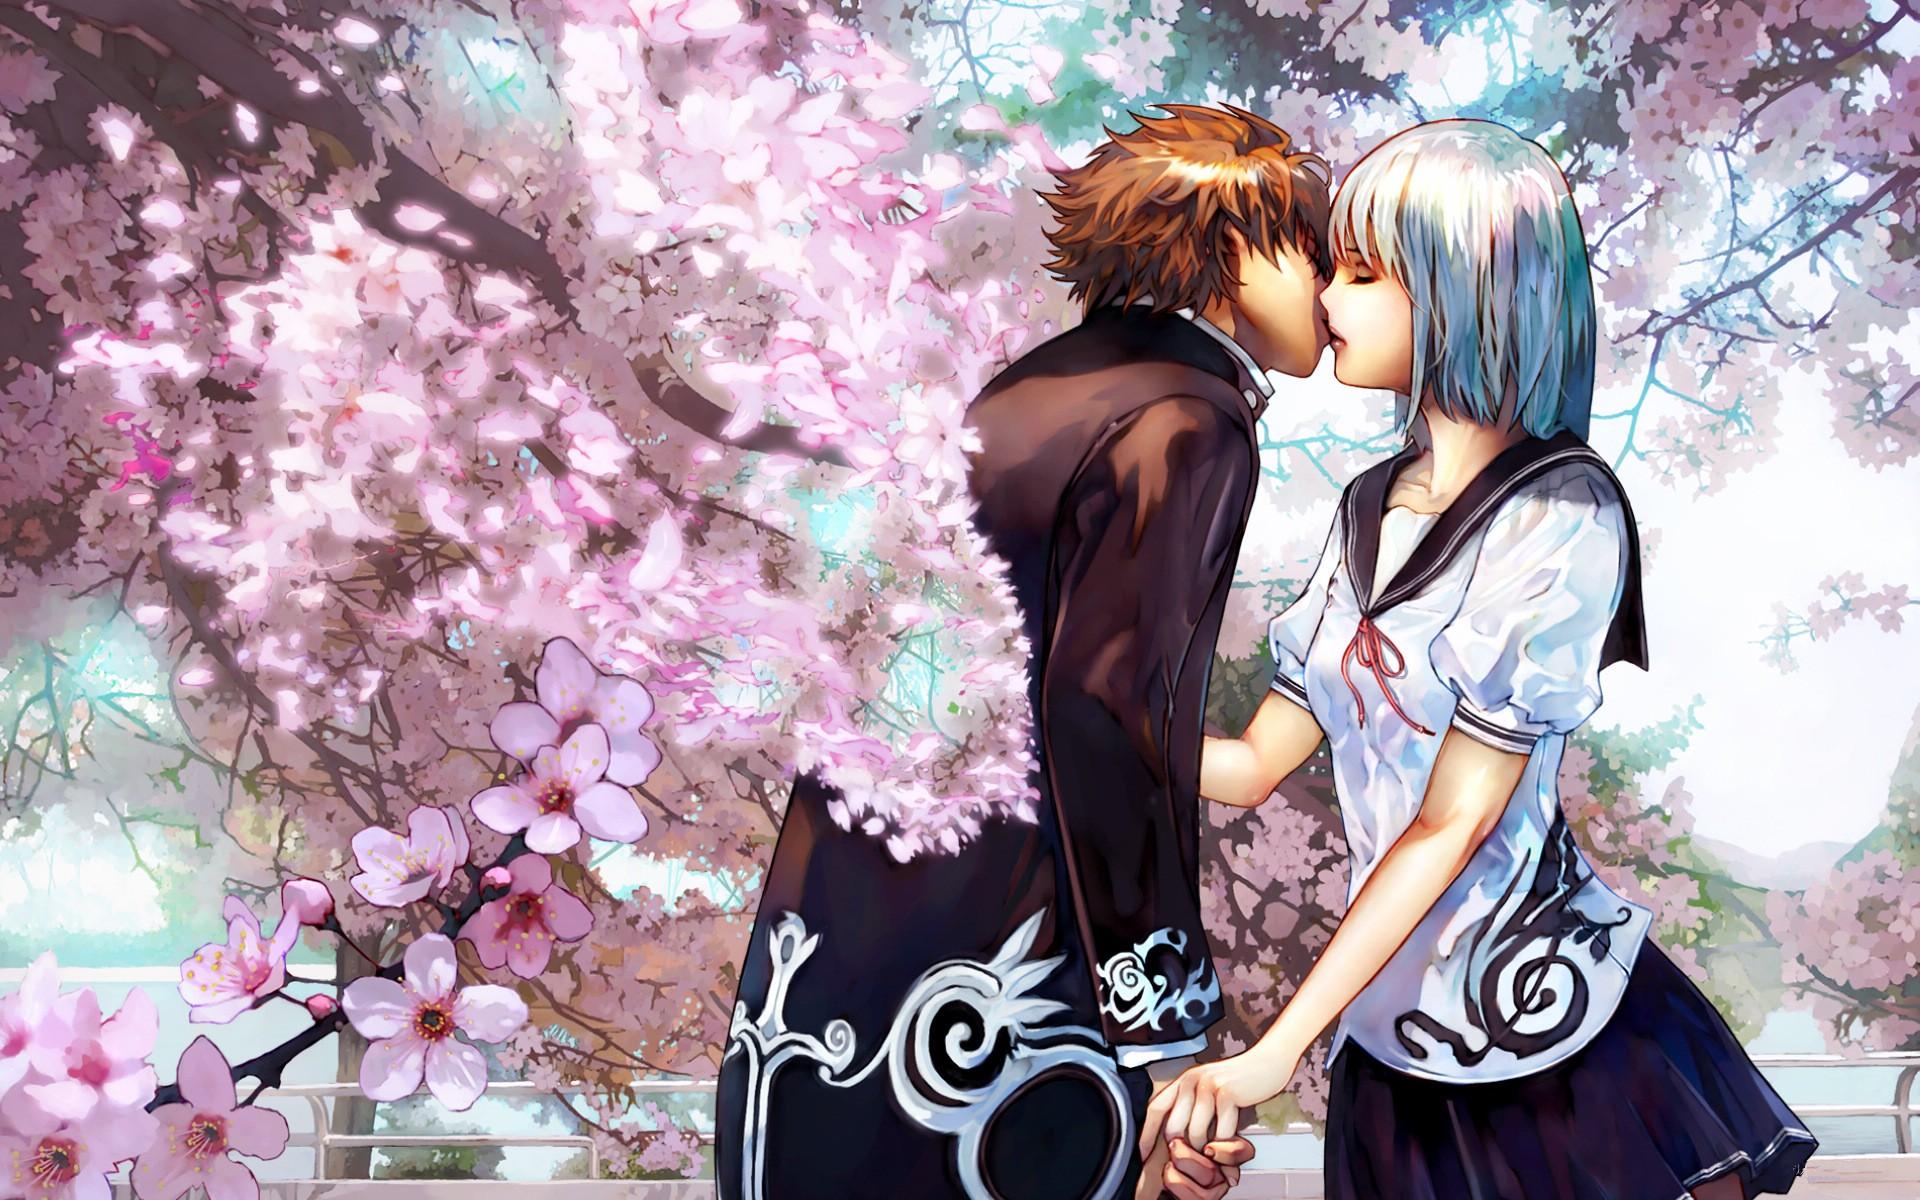 Sakura Anime Romantic Kiss Wallpaper Desktop Girl And Boy